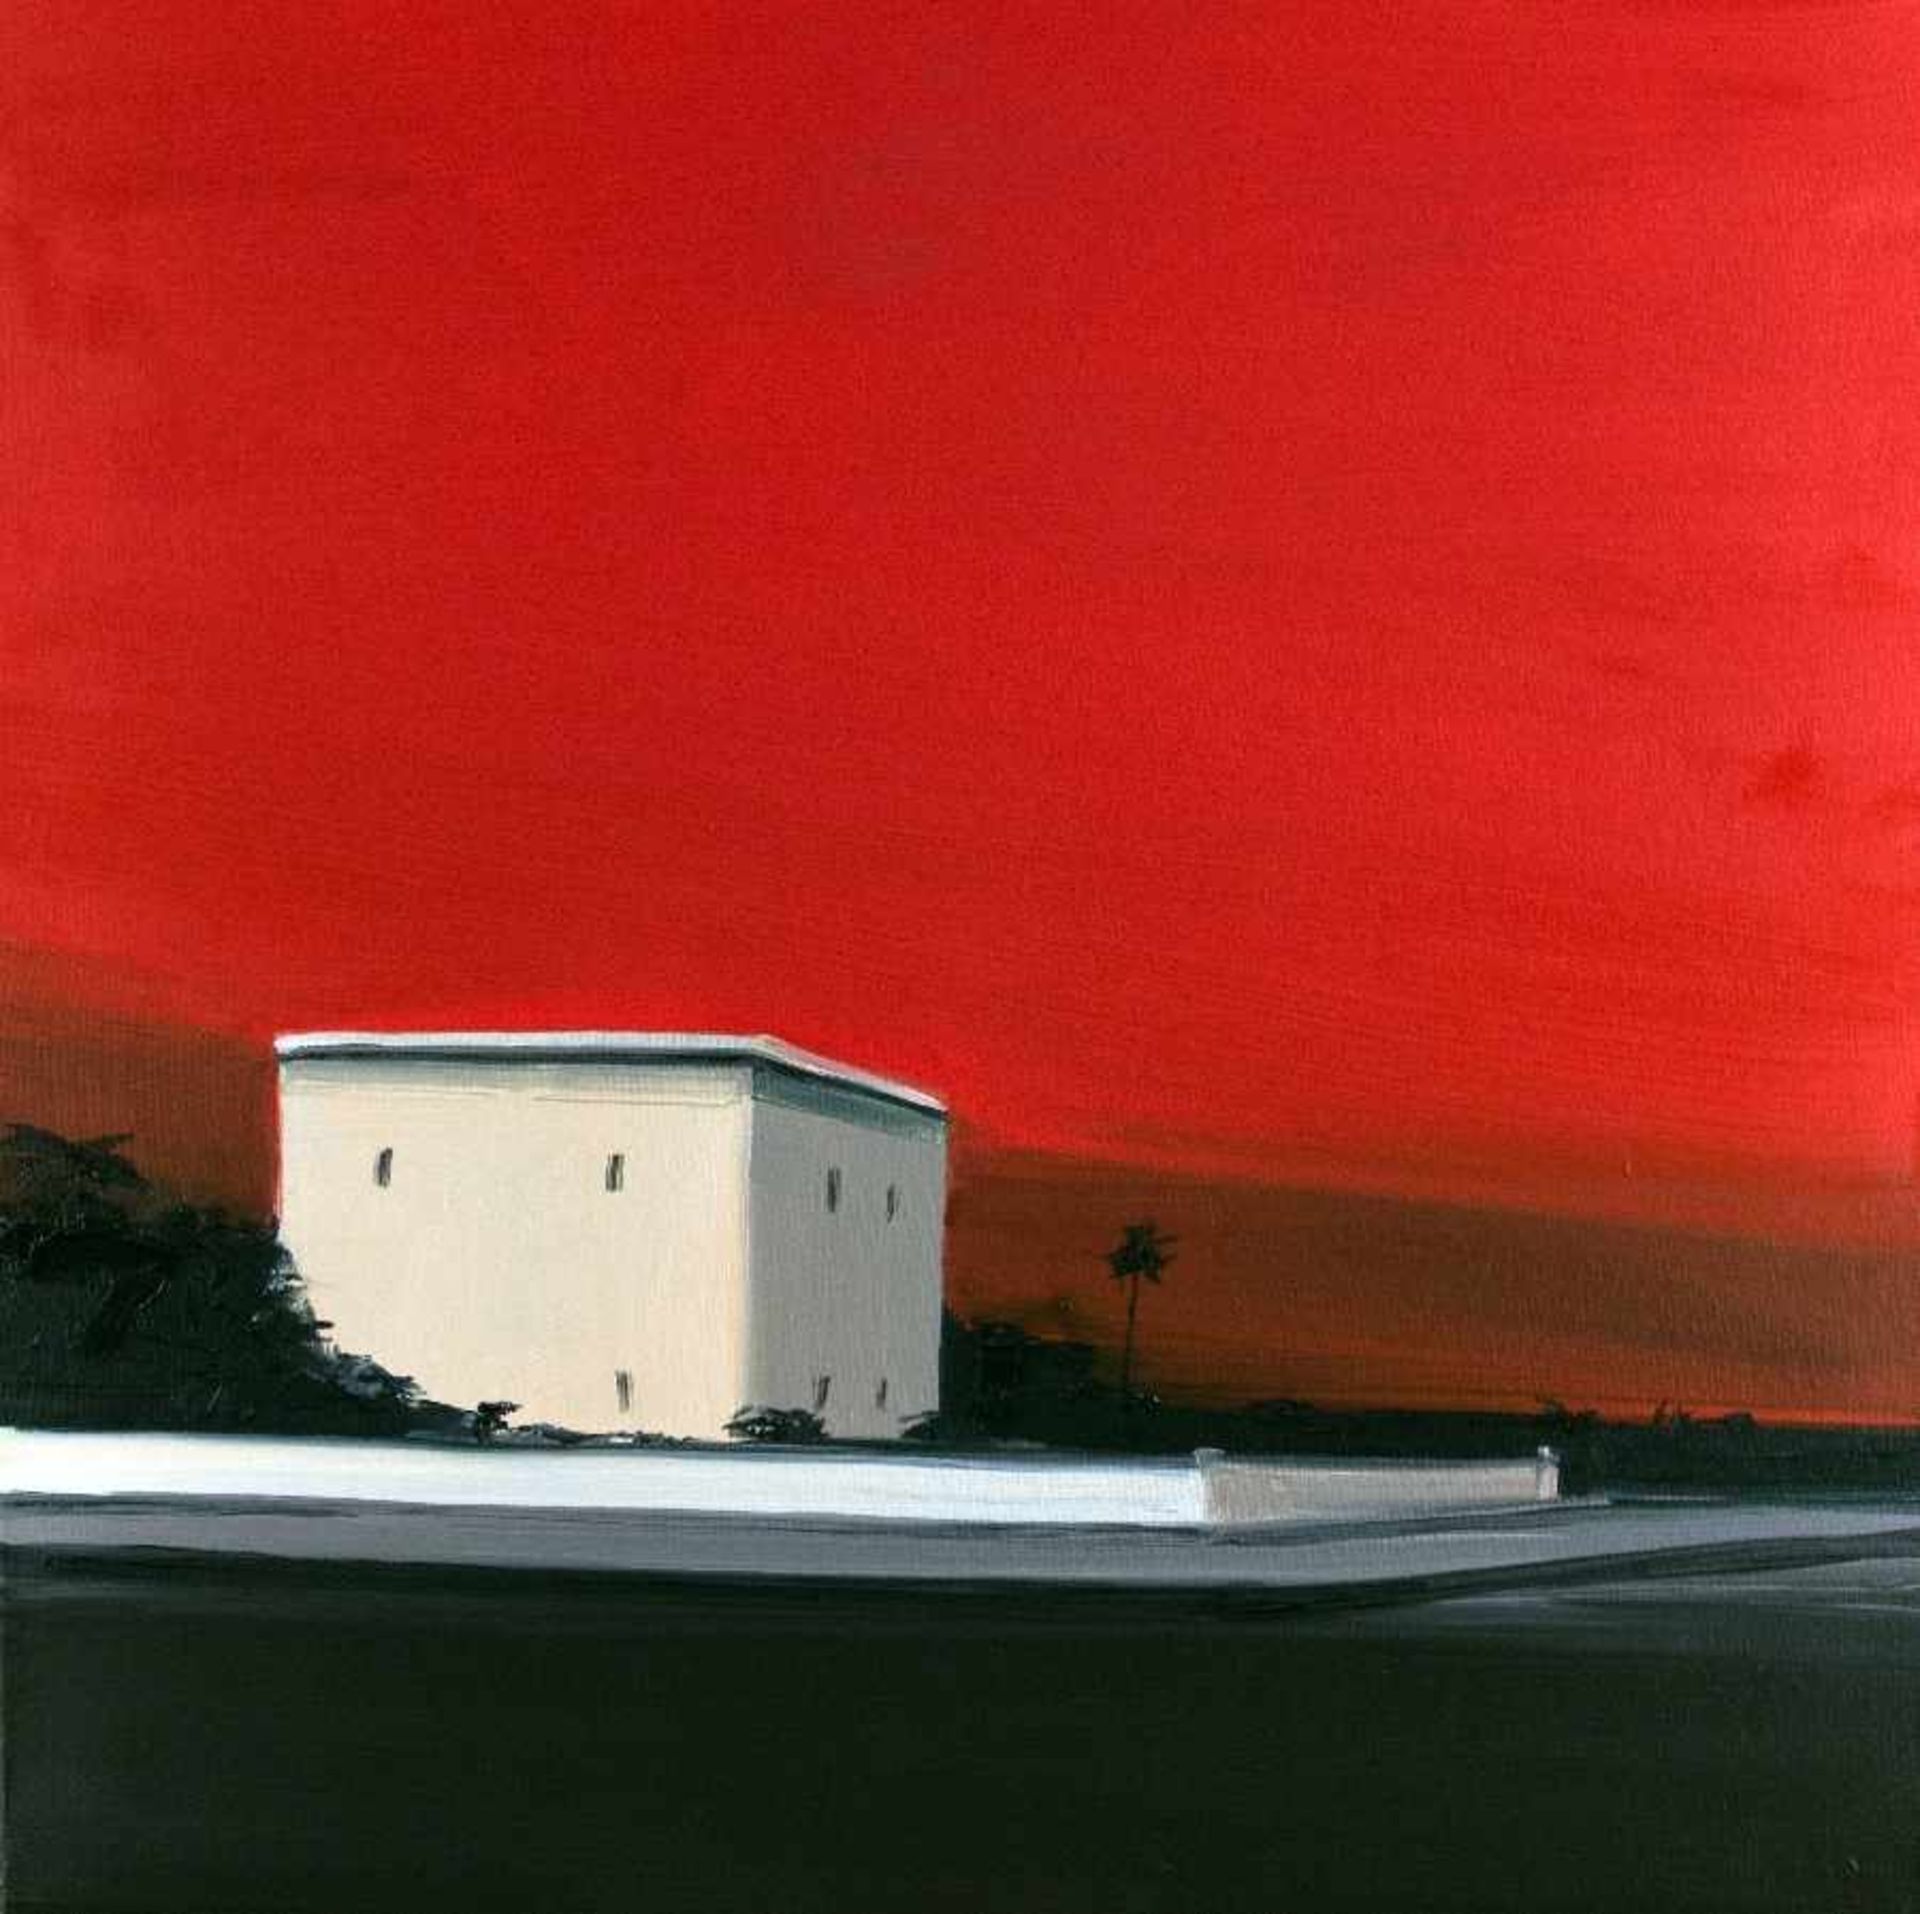 Sigrid Nienstedt1962 Krebeck930 (House on the coast)Oil on canvas; H 60 cm, W 60 cm; verso